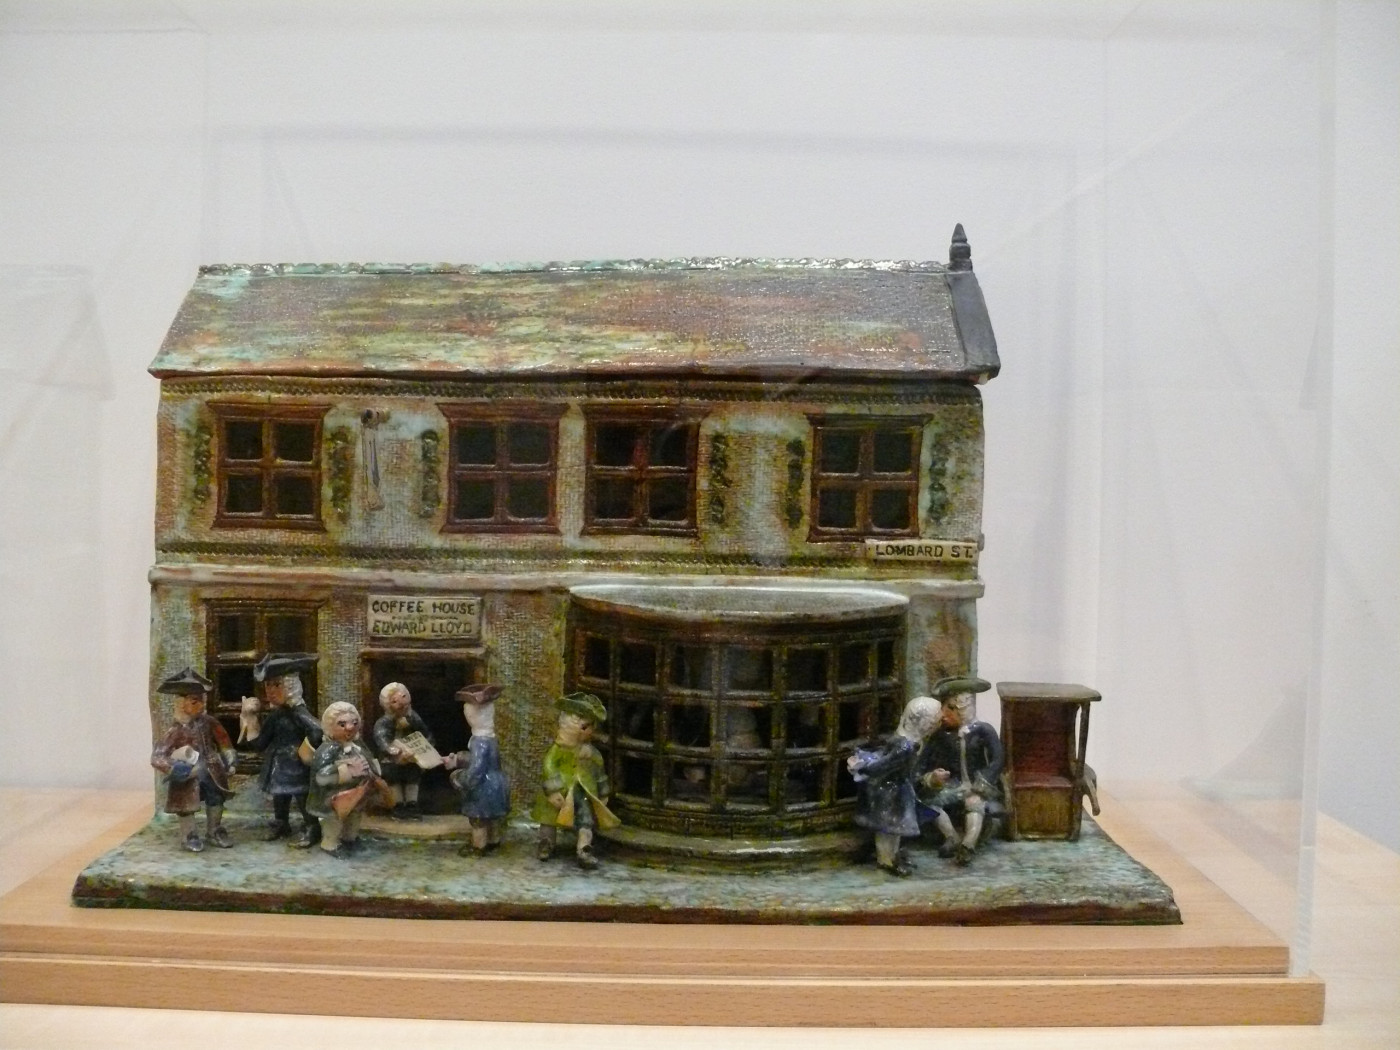 Coffee House model